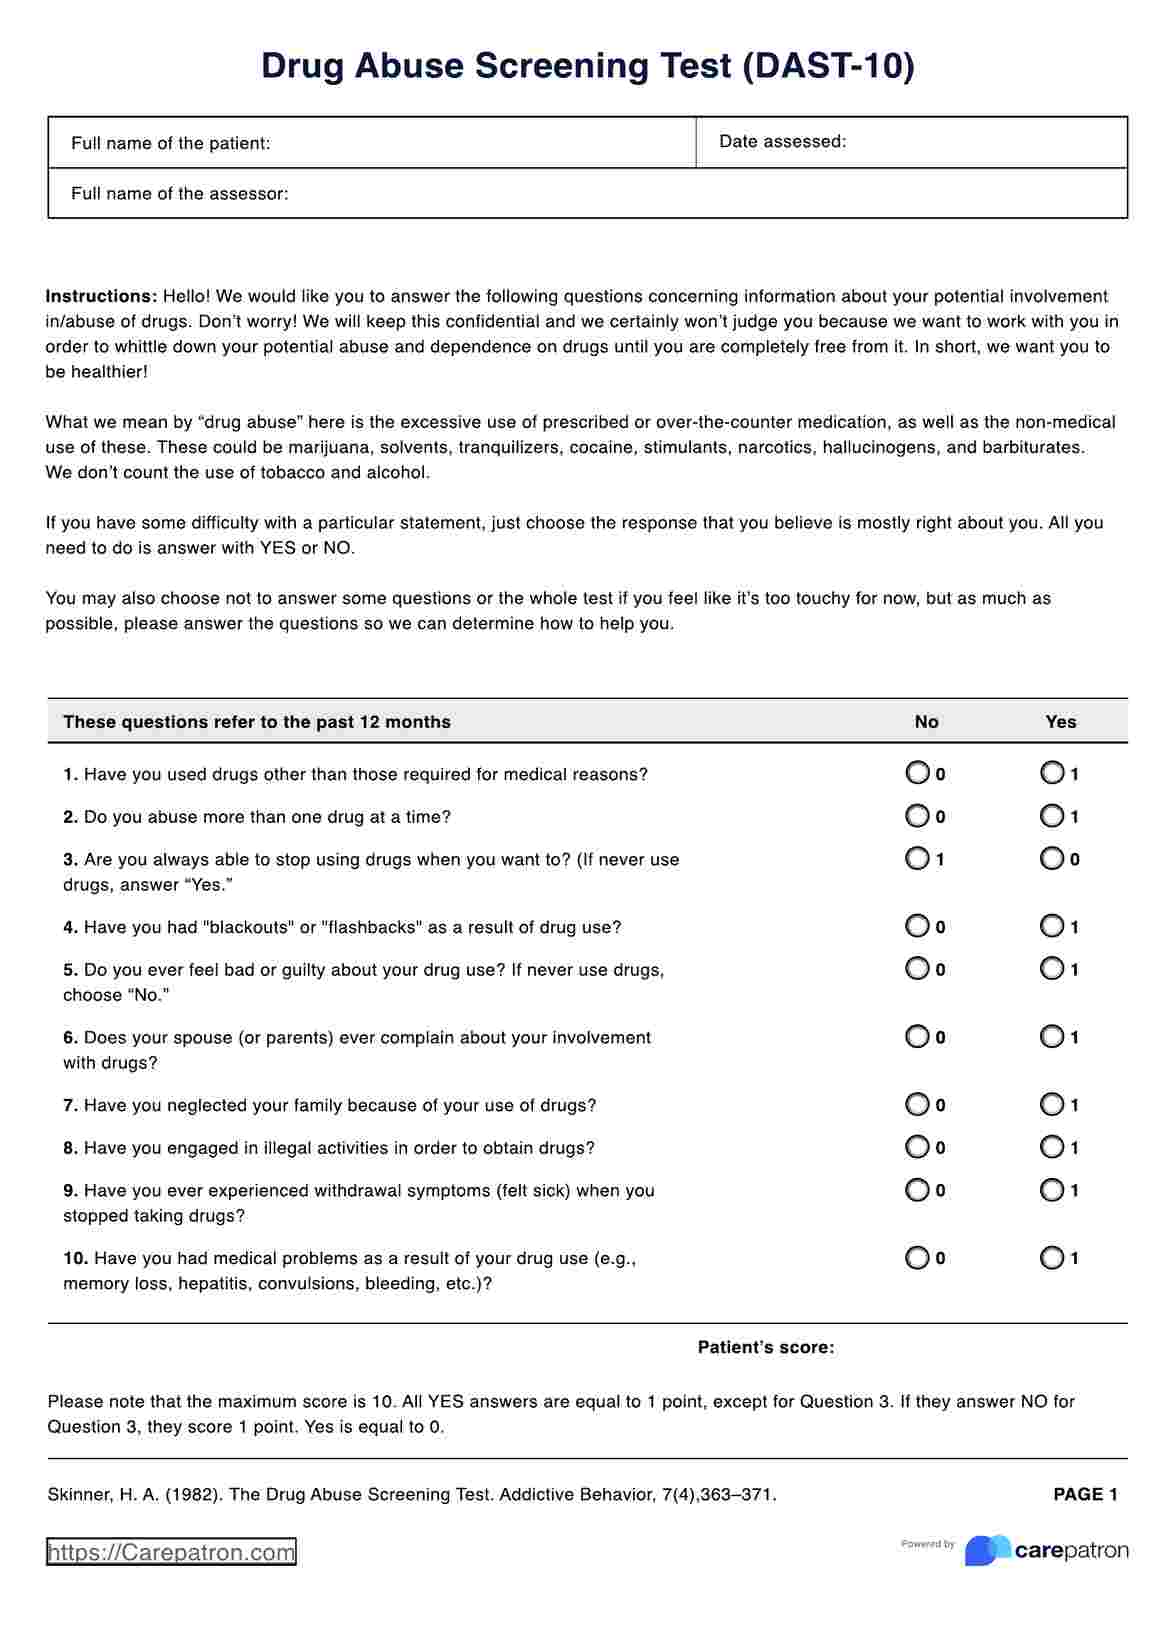 Drug Abuse Screening Test (DAST-10) PDF Example